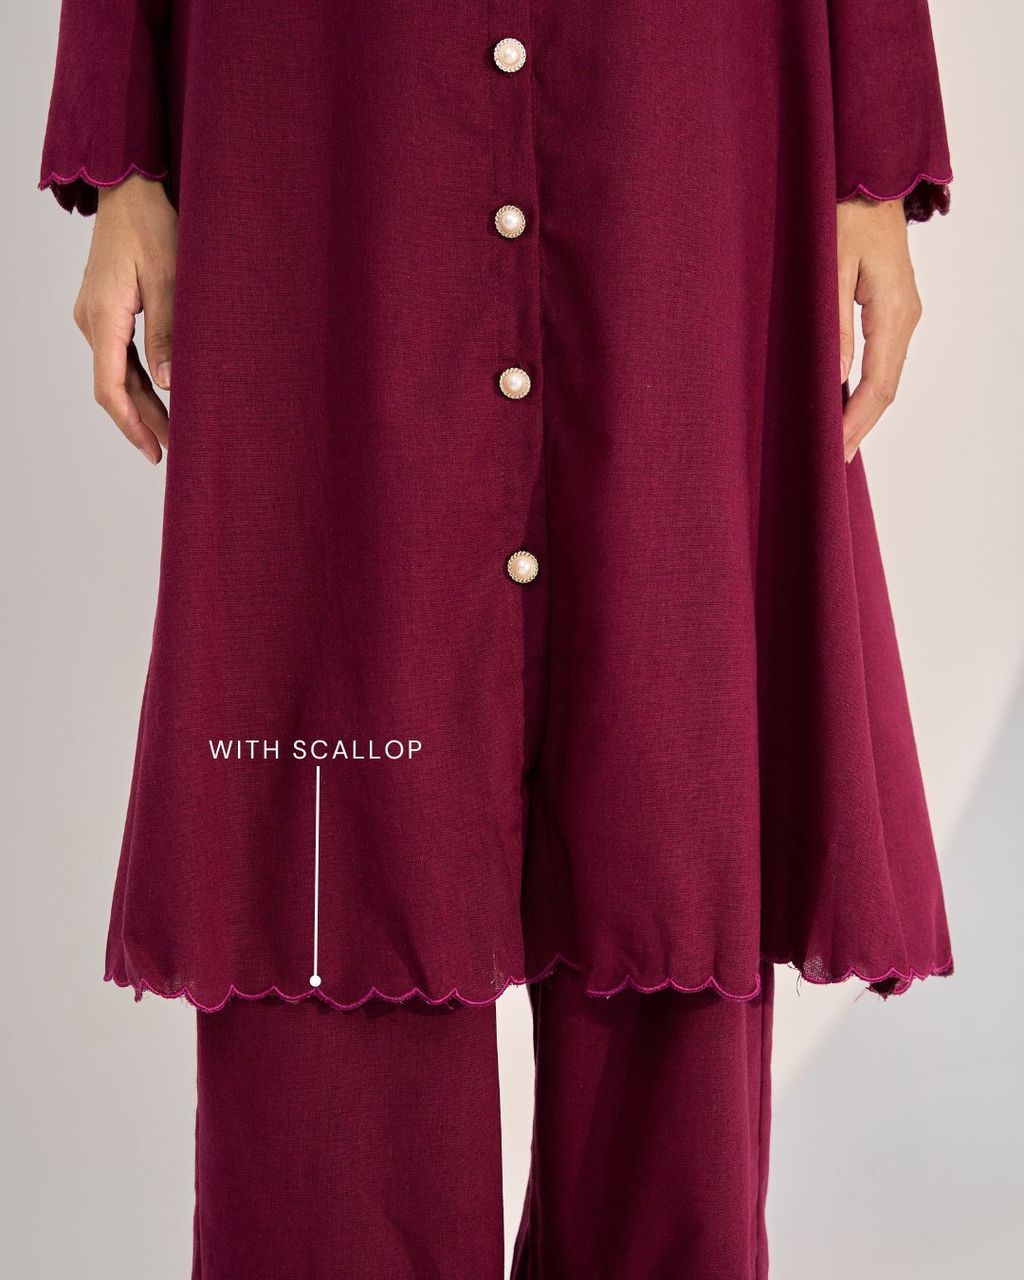 haura-wear-cotton-baju-muslimah-set-seluar-set-skirt-suit-muslimah-set-baju-dan-seluar-muslimah-palazzo (23)